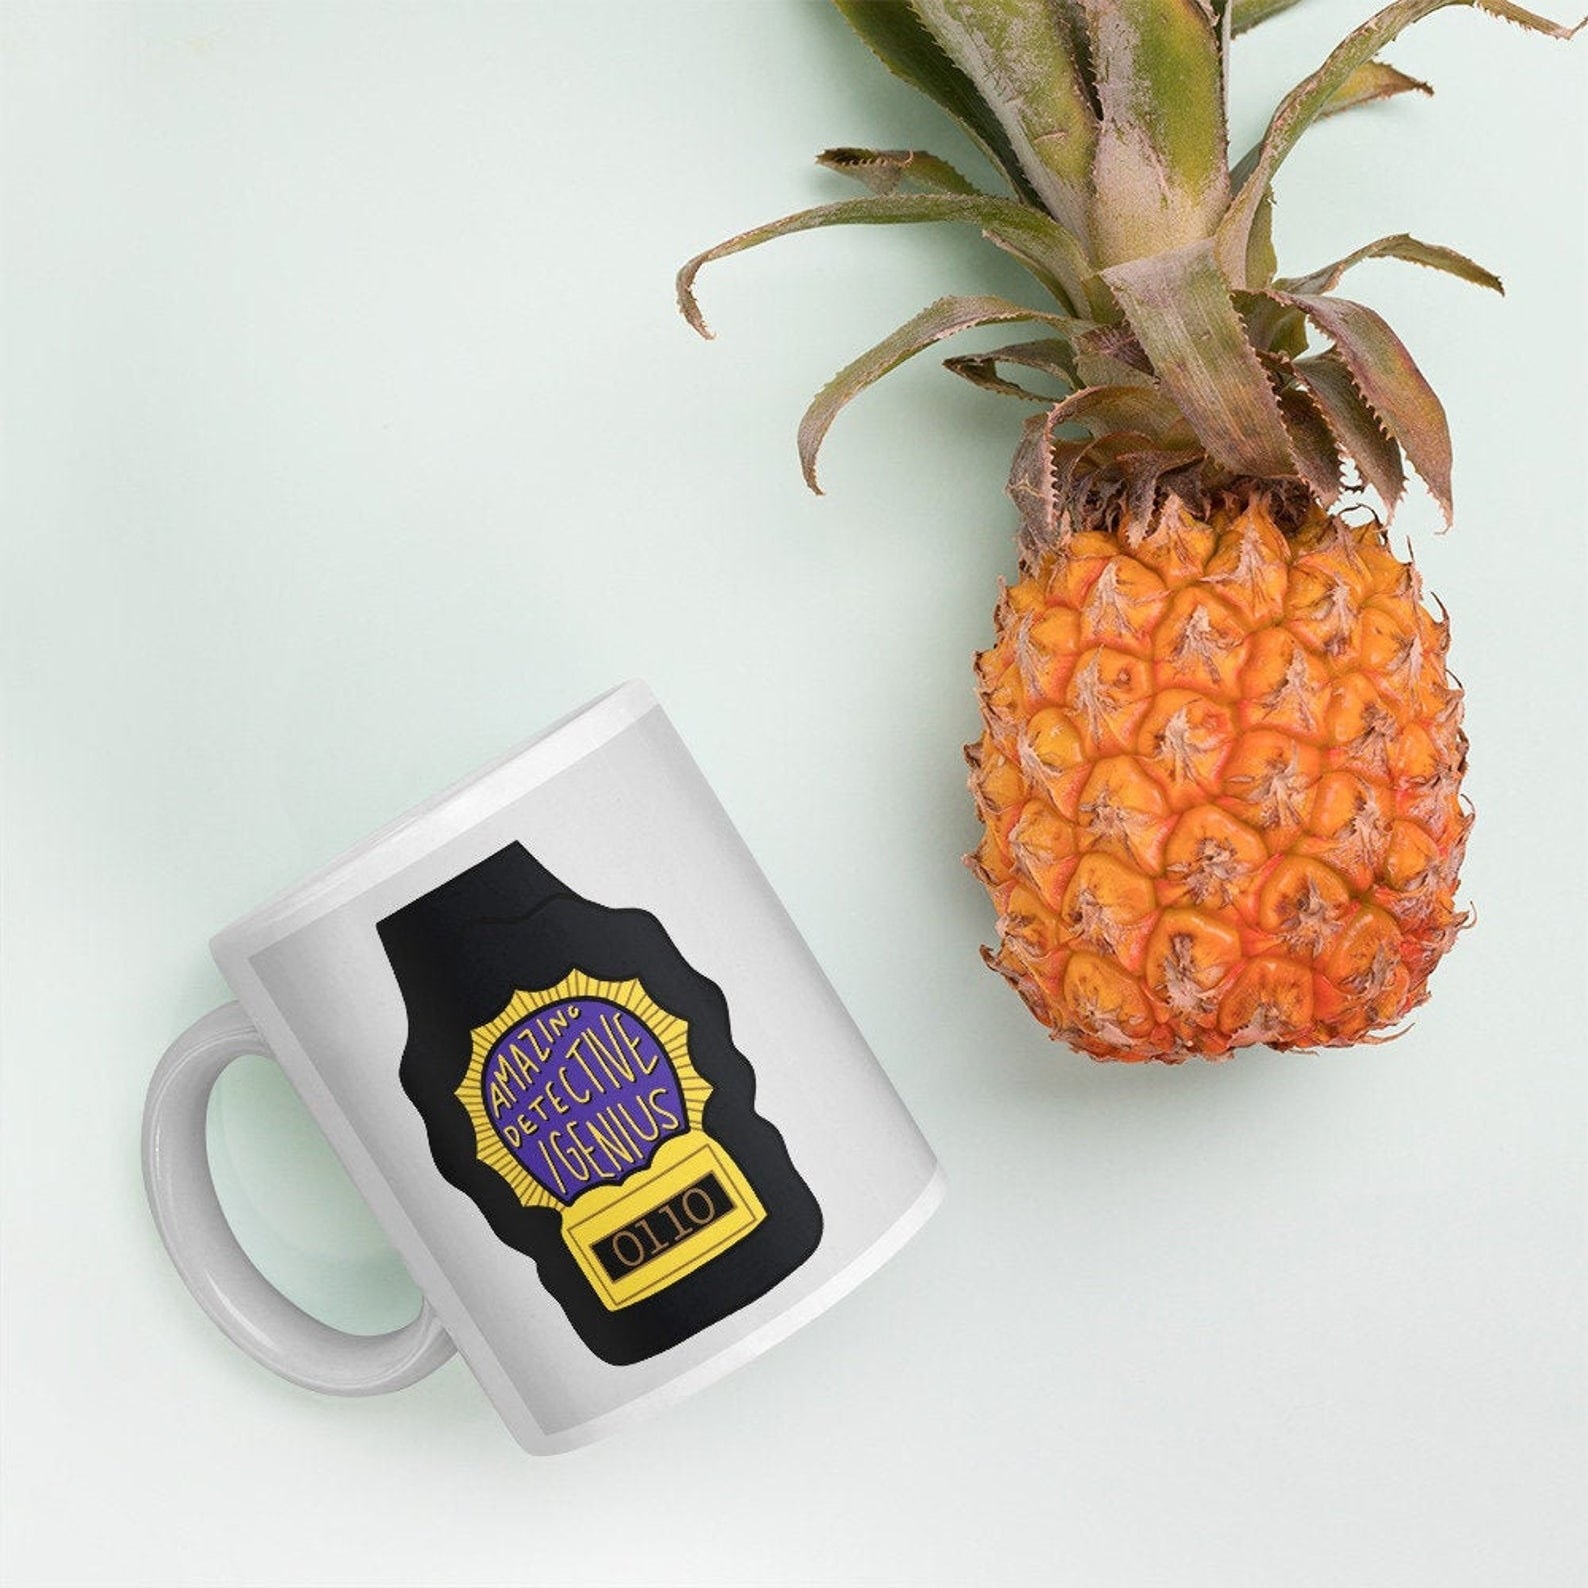 A police badge design on a mug that says &quot;amazing detective slash genius&quot;